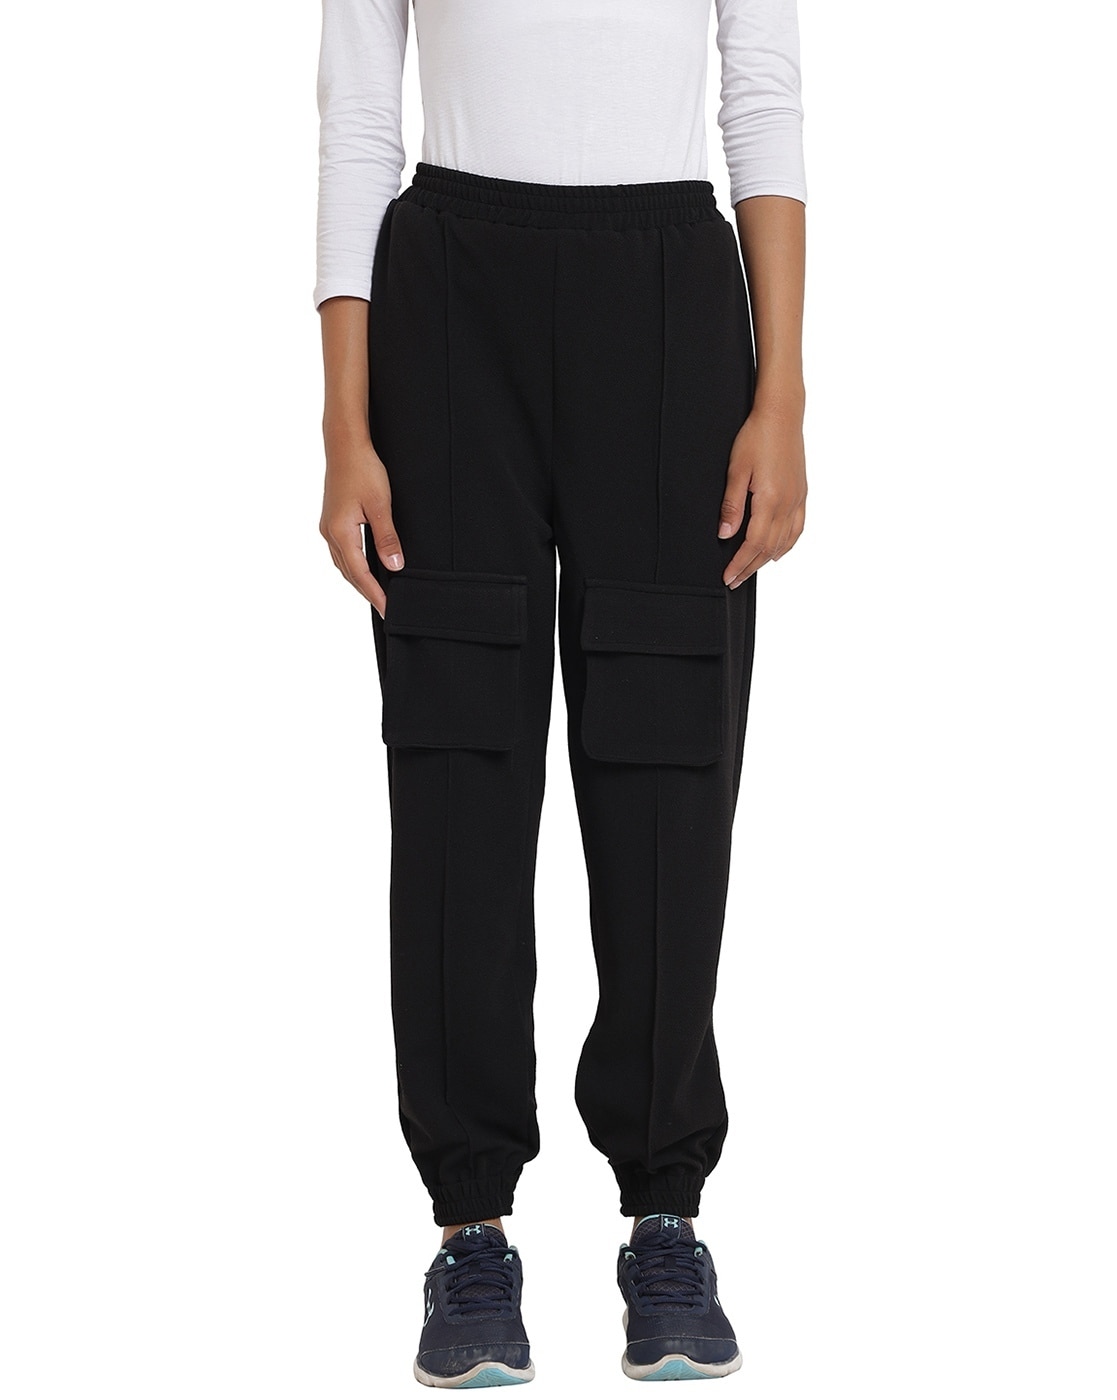 Womens Cargo Pants Pants Casual Pocket High Waist Black S - Walmart.com